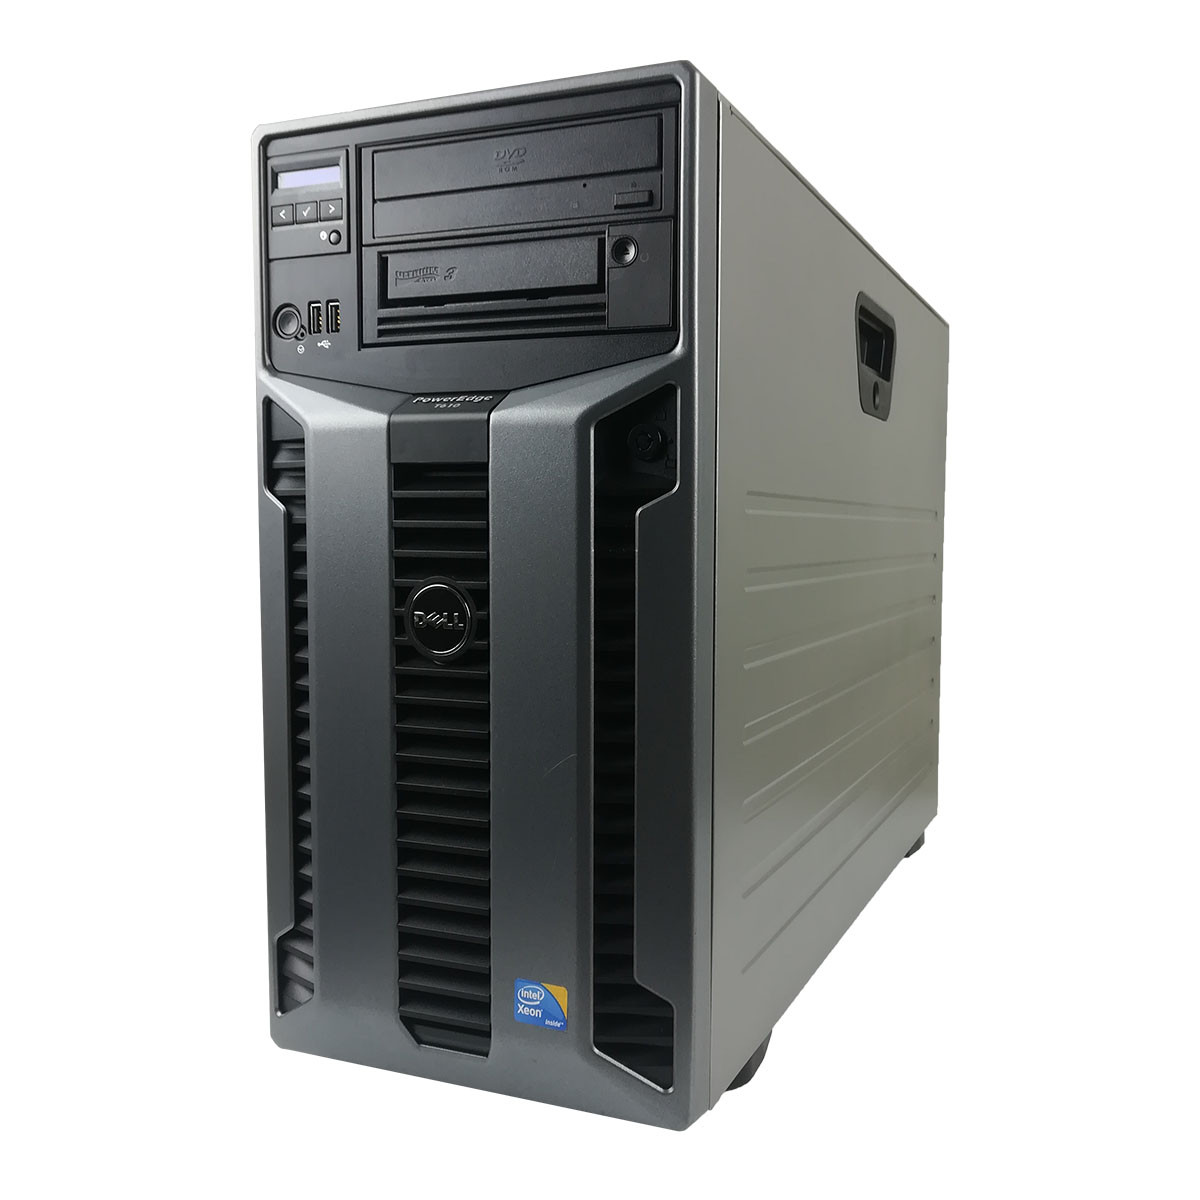 Server Dell PowerEdge T610 Tower, 2 x Intel Xeon Hexa Core X5650 2.66GHz - 3.06GHz, 32GB DDR3-ECC, Raid Perc 6i, 2 x 450GB HDD SAS/15K + 2 x 2TB HDD SATA, DVD-ROM, Idrac 6 Enterprise, 2 PSU Hot Swap